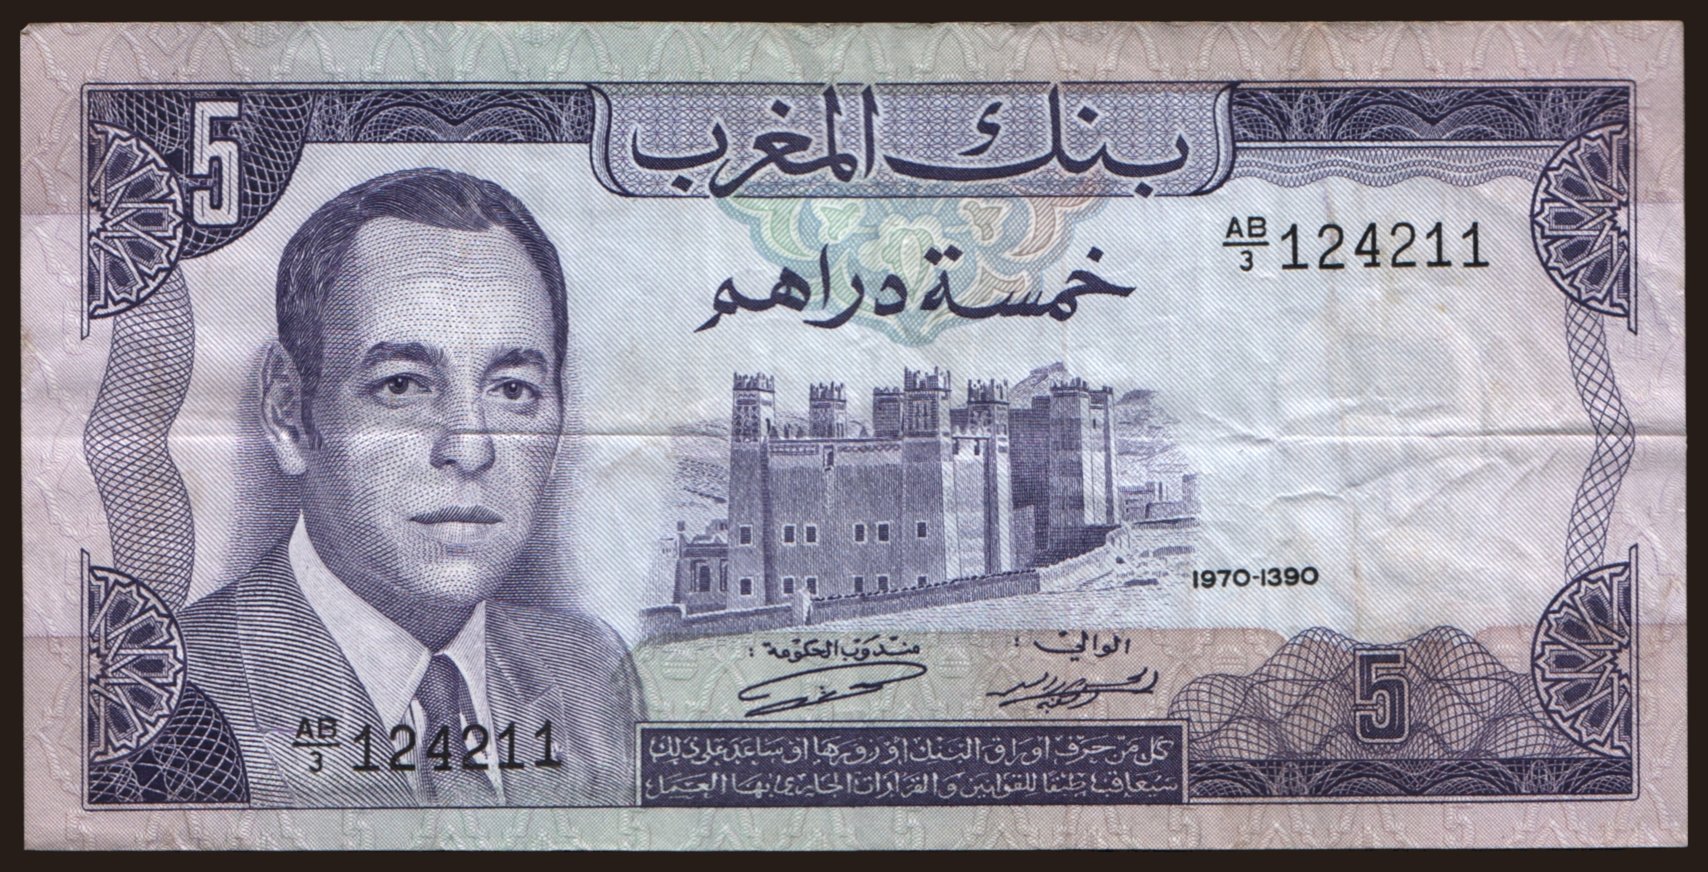 5 dirhams, 1970